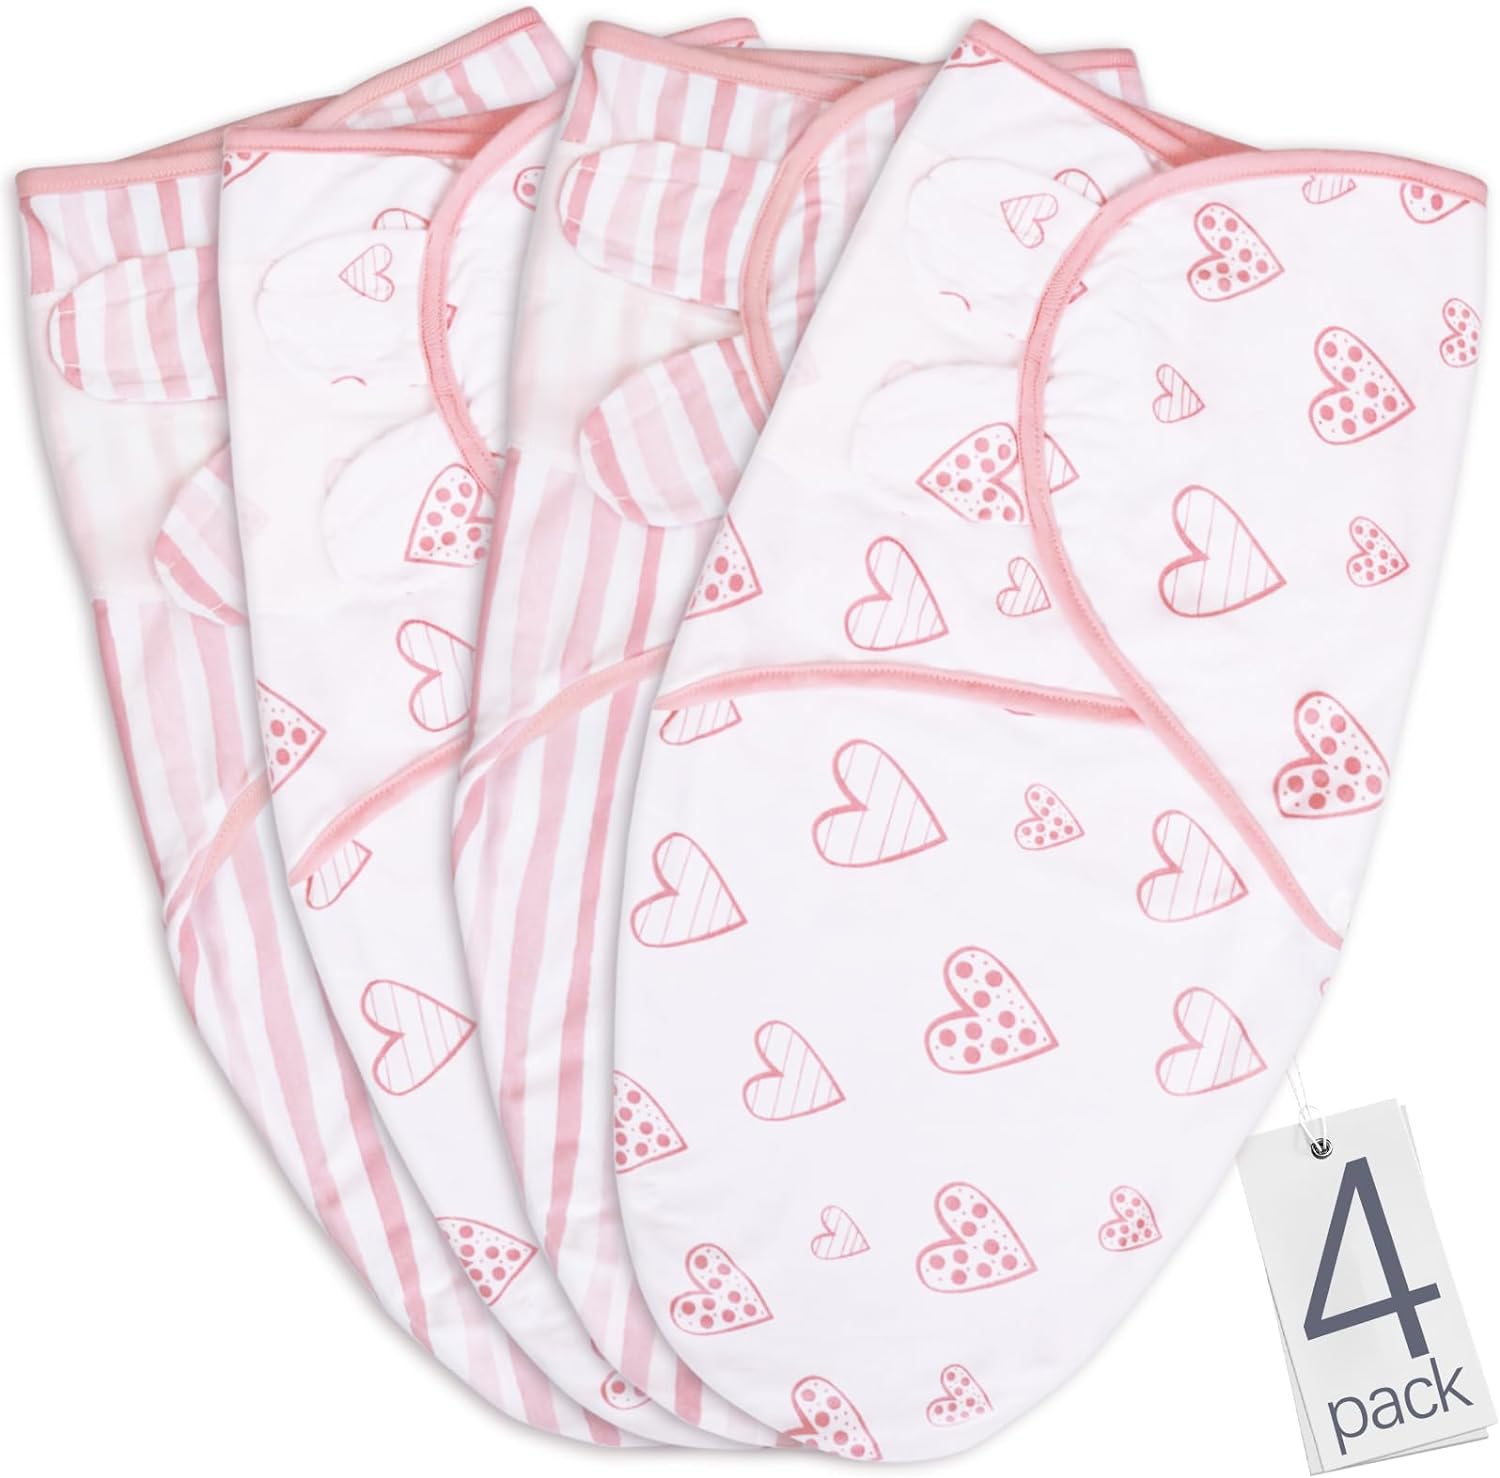 Baby Swaddles - for Newborn 0-3 Months, 4 Pack, 100% Organic Cotton, Pink  - Biloban Online Store